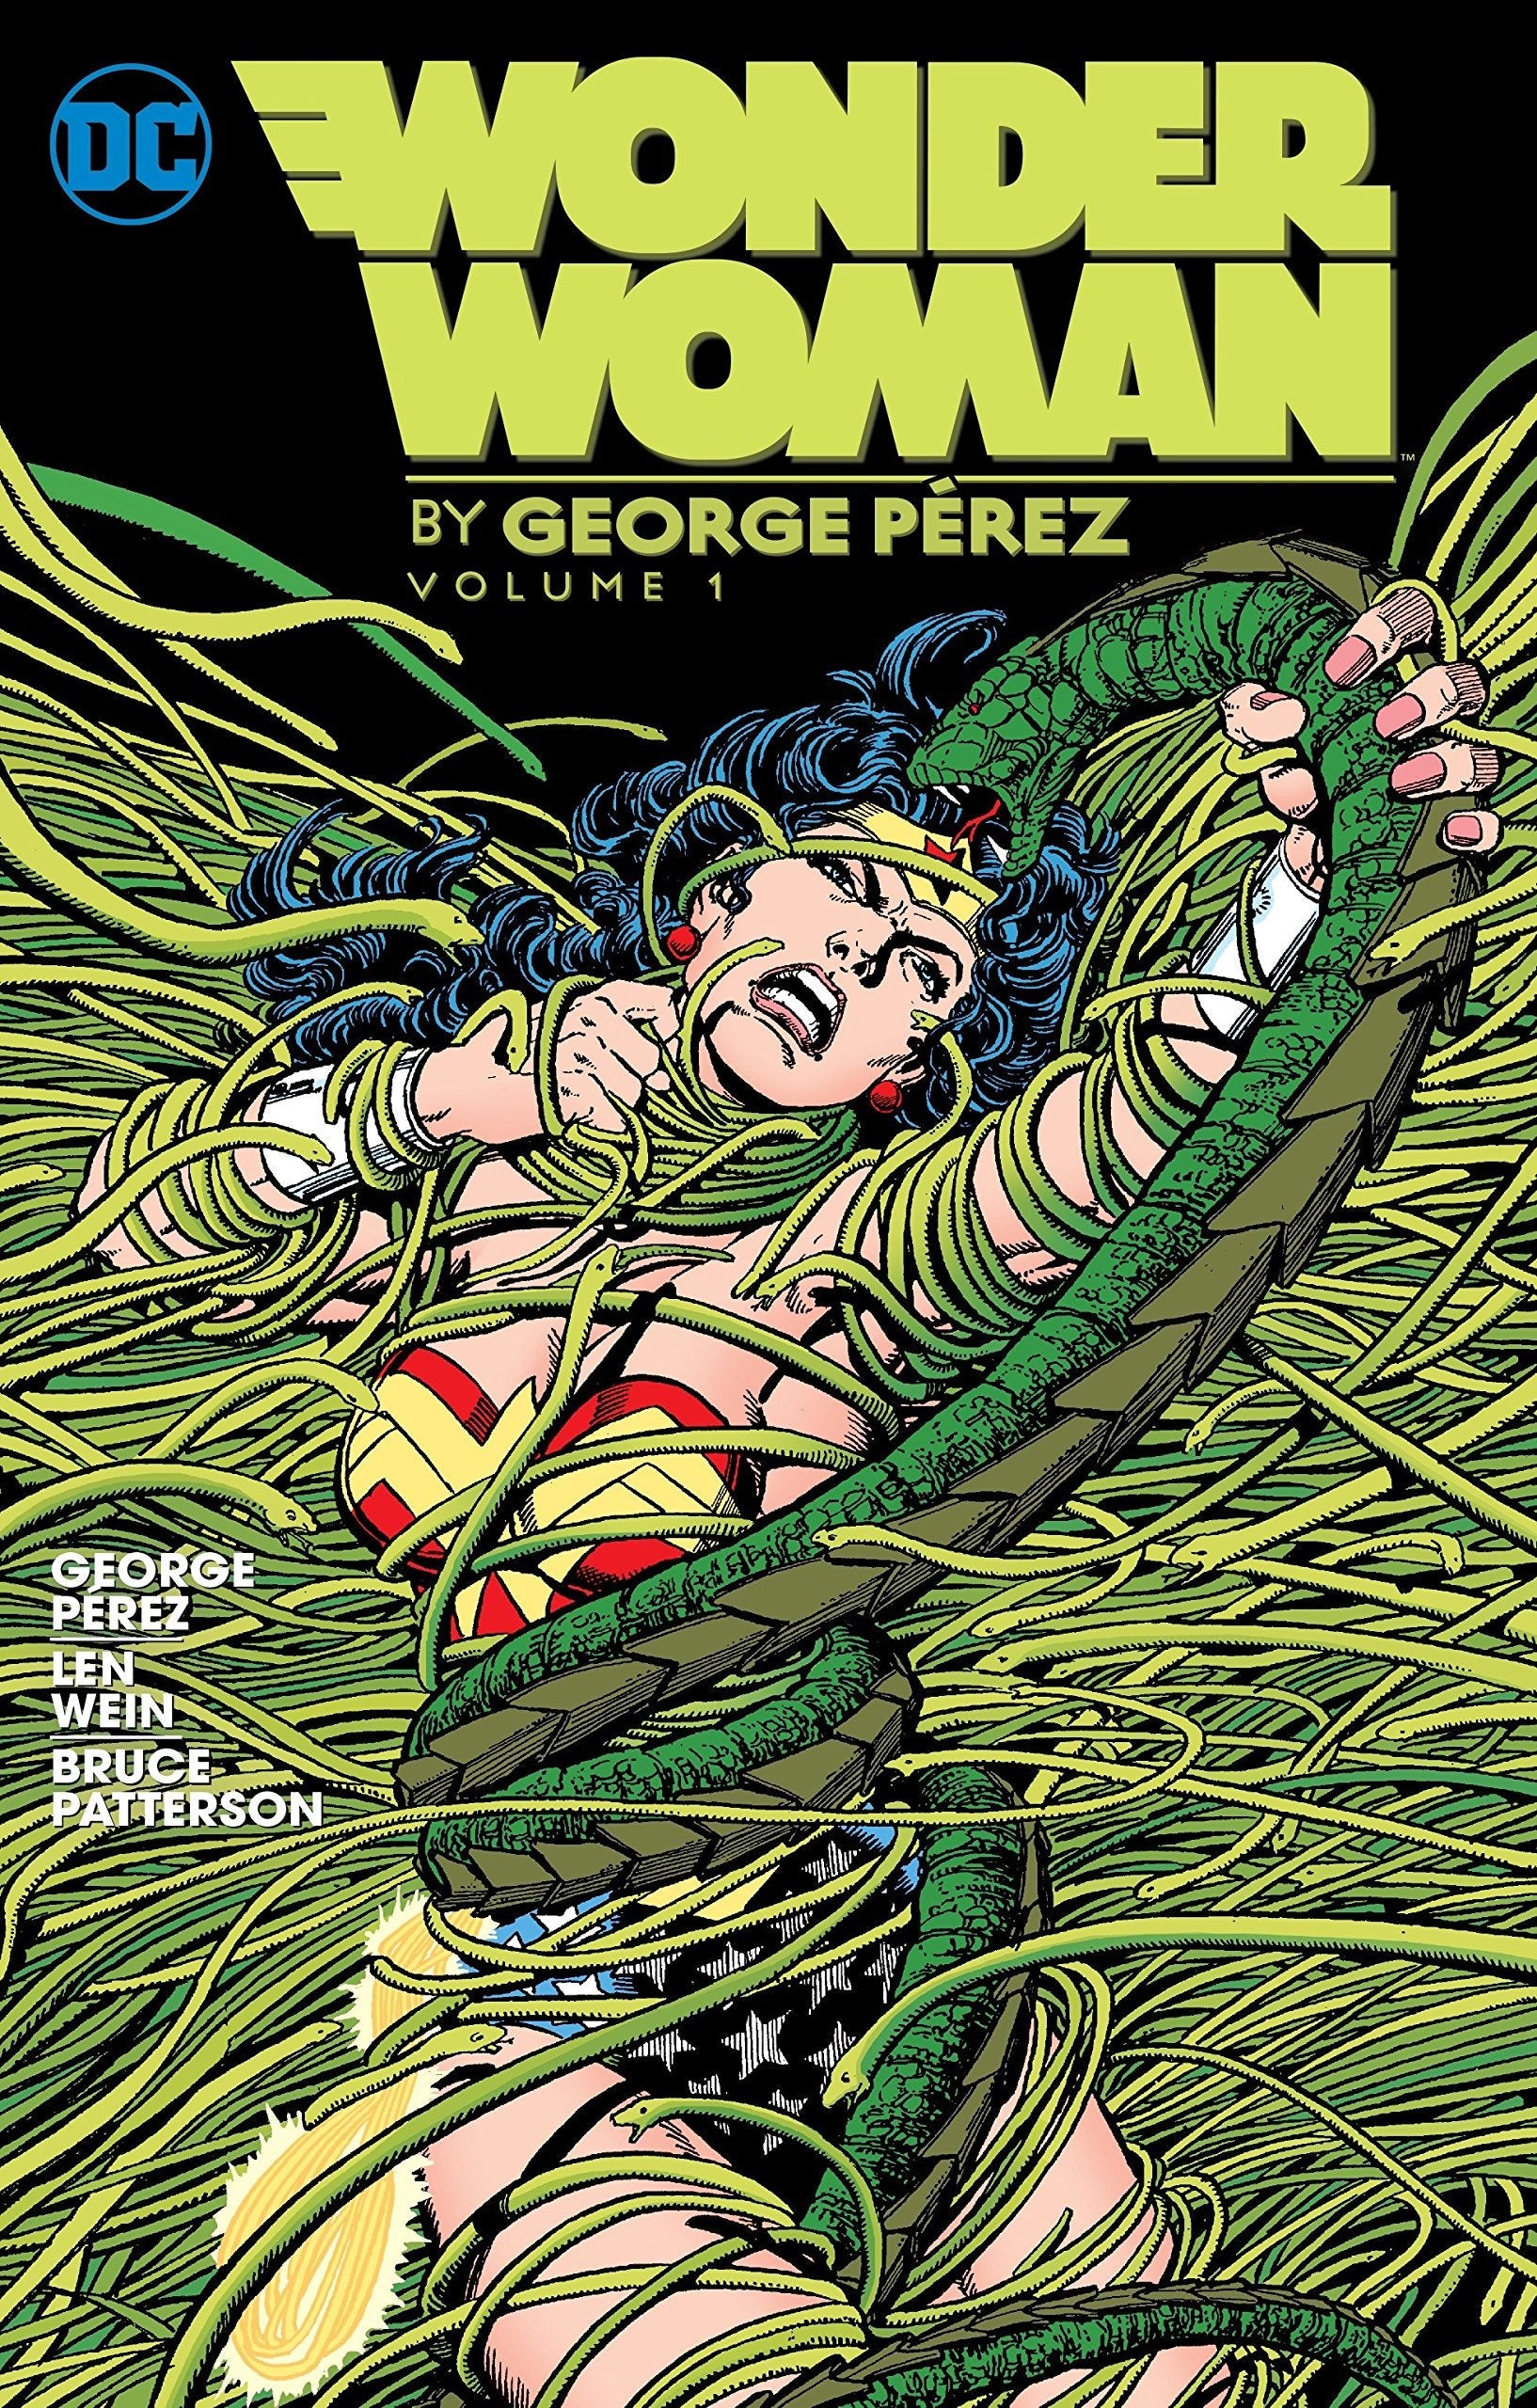 DC comics, DC graphic novels, wonder woman - Best Books